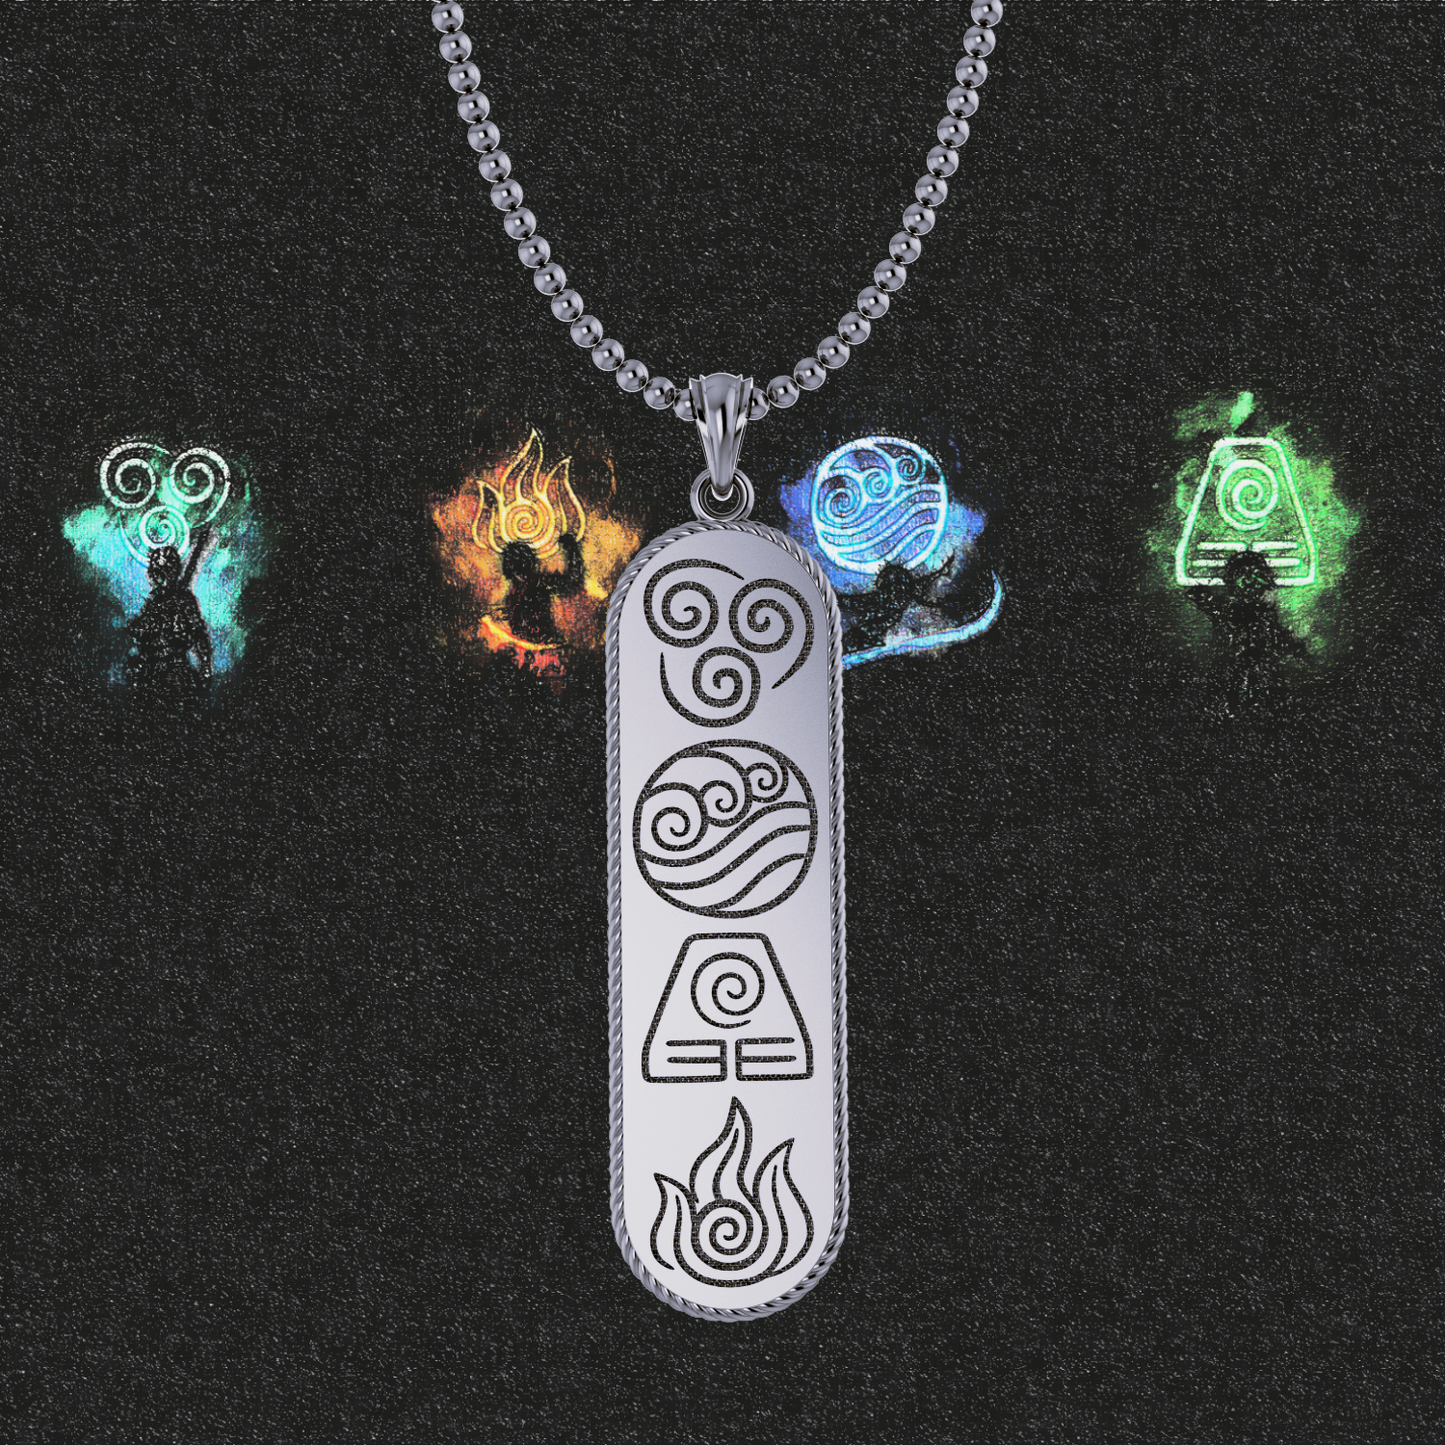 The Avatar Elemental Pendant